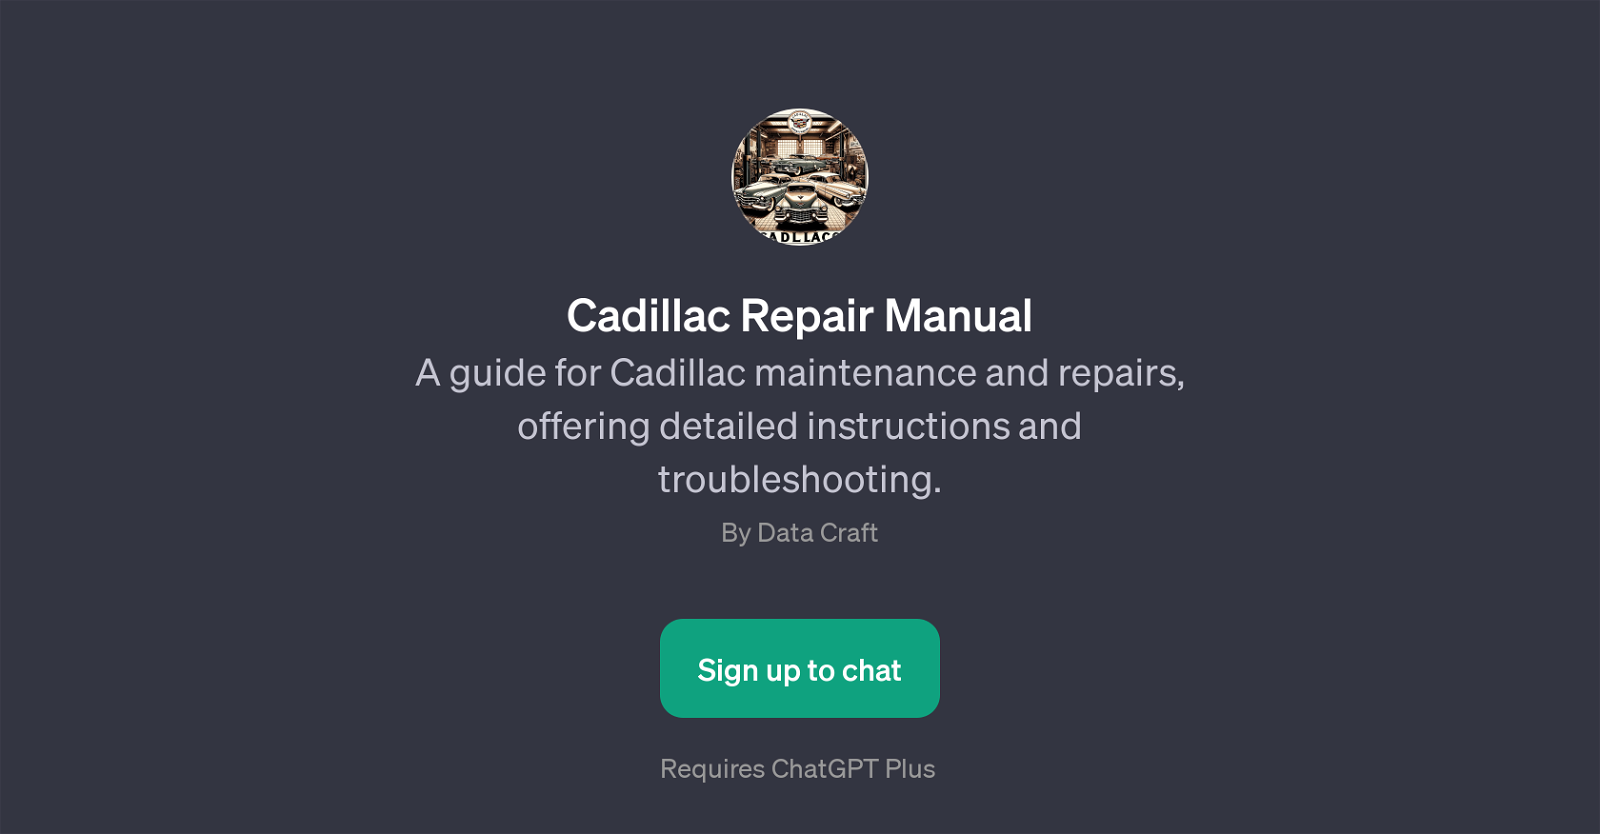 Cadillac Repair Manual website